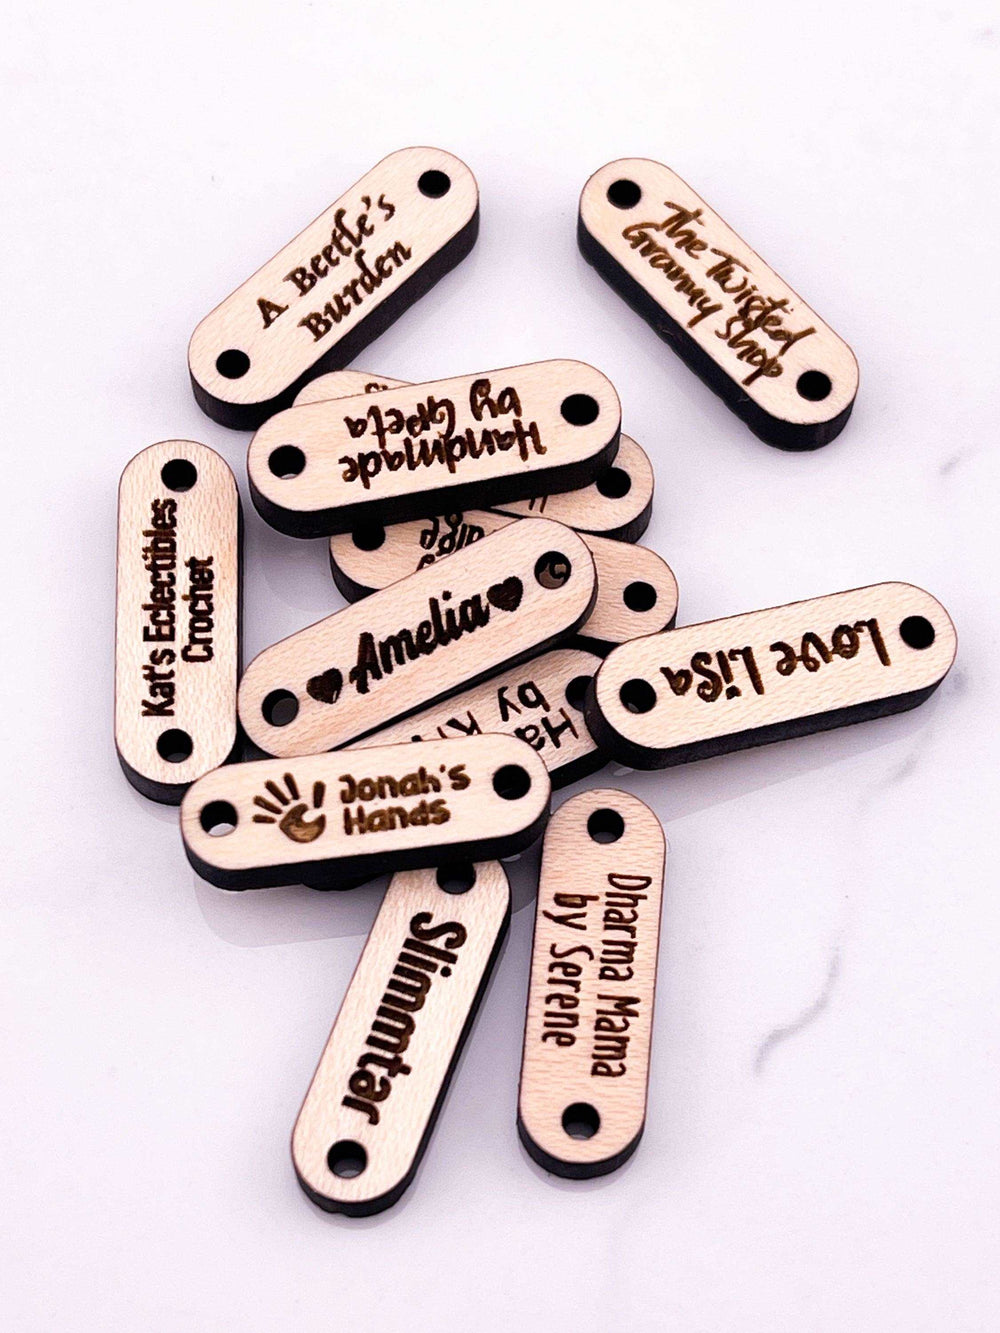 Custom Wooden Buttons - Rounded Rectangular -1 x .31 in. - Artifox Studios